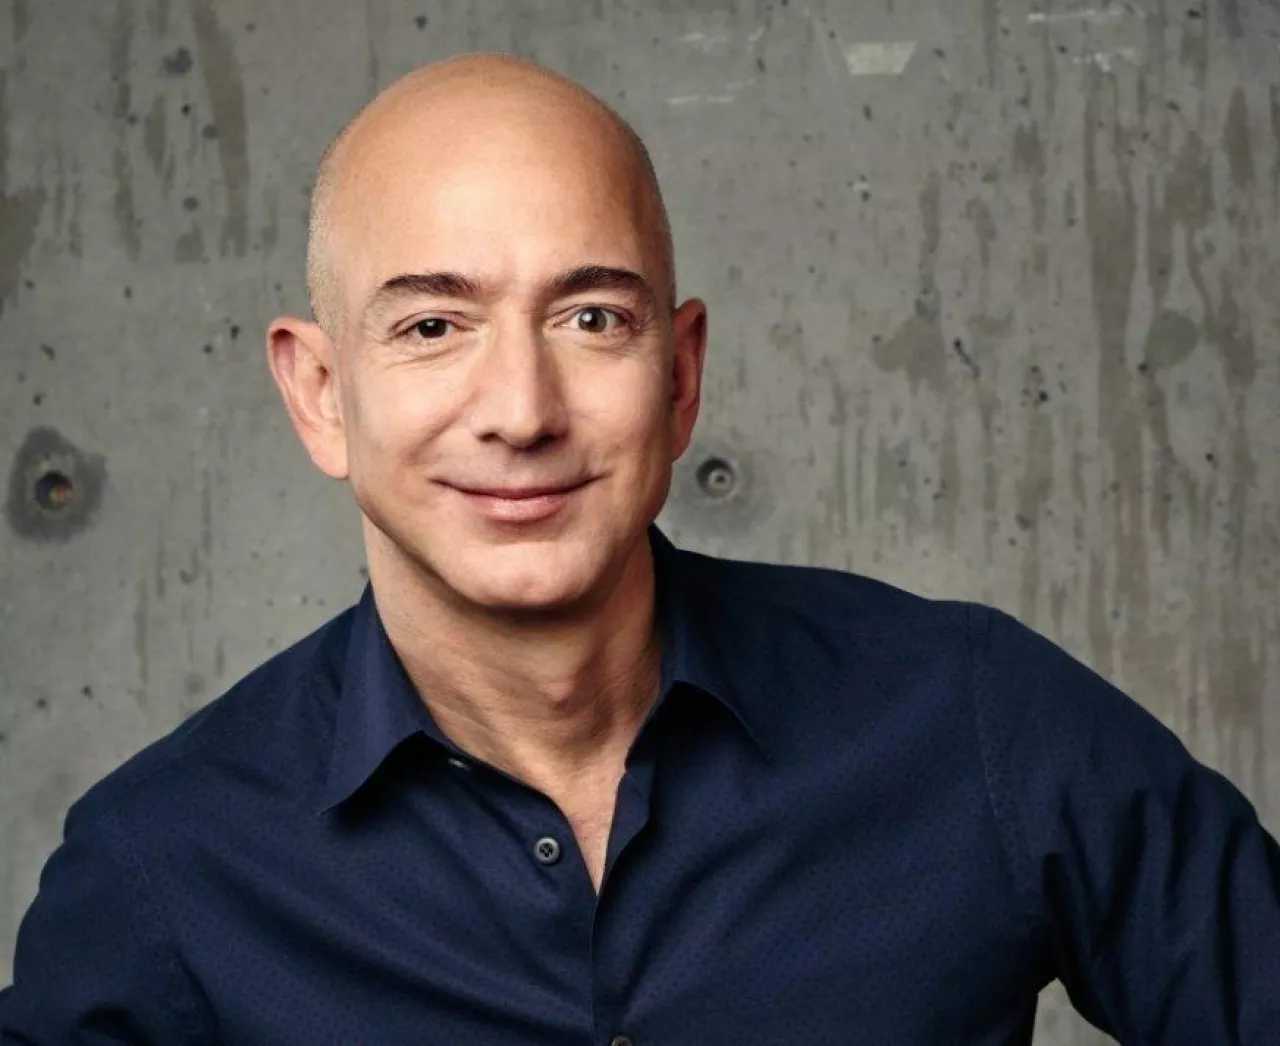 Jeff Bezos ((fot. Amazon))